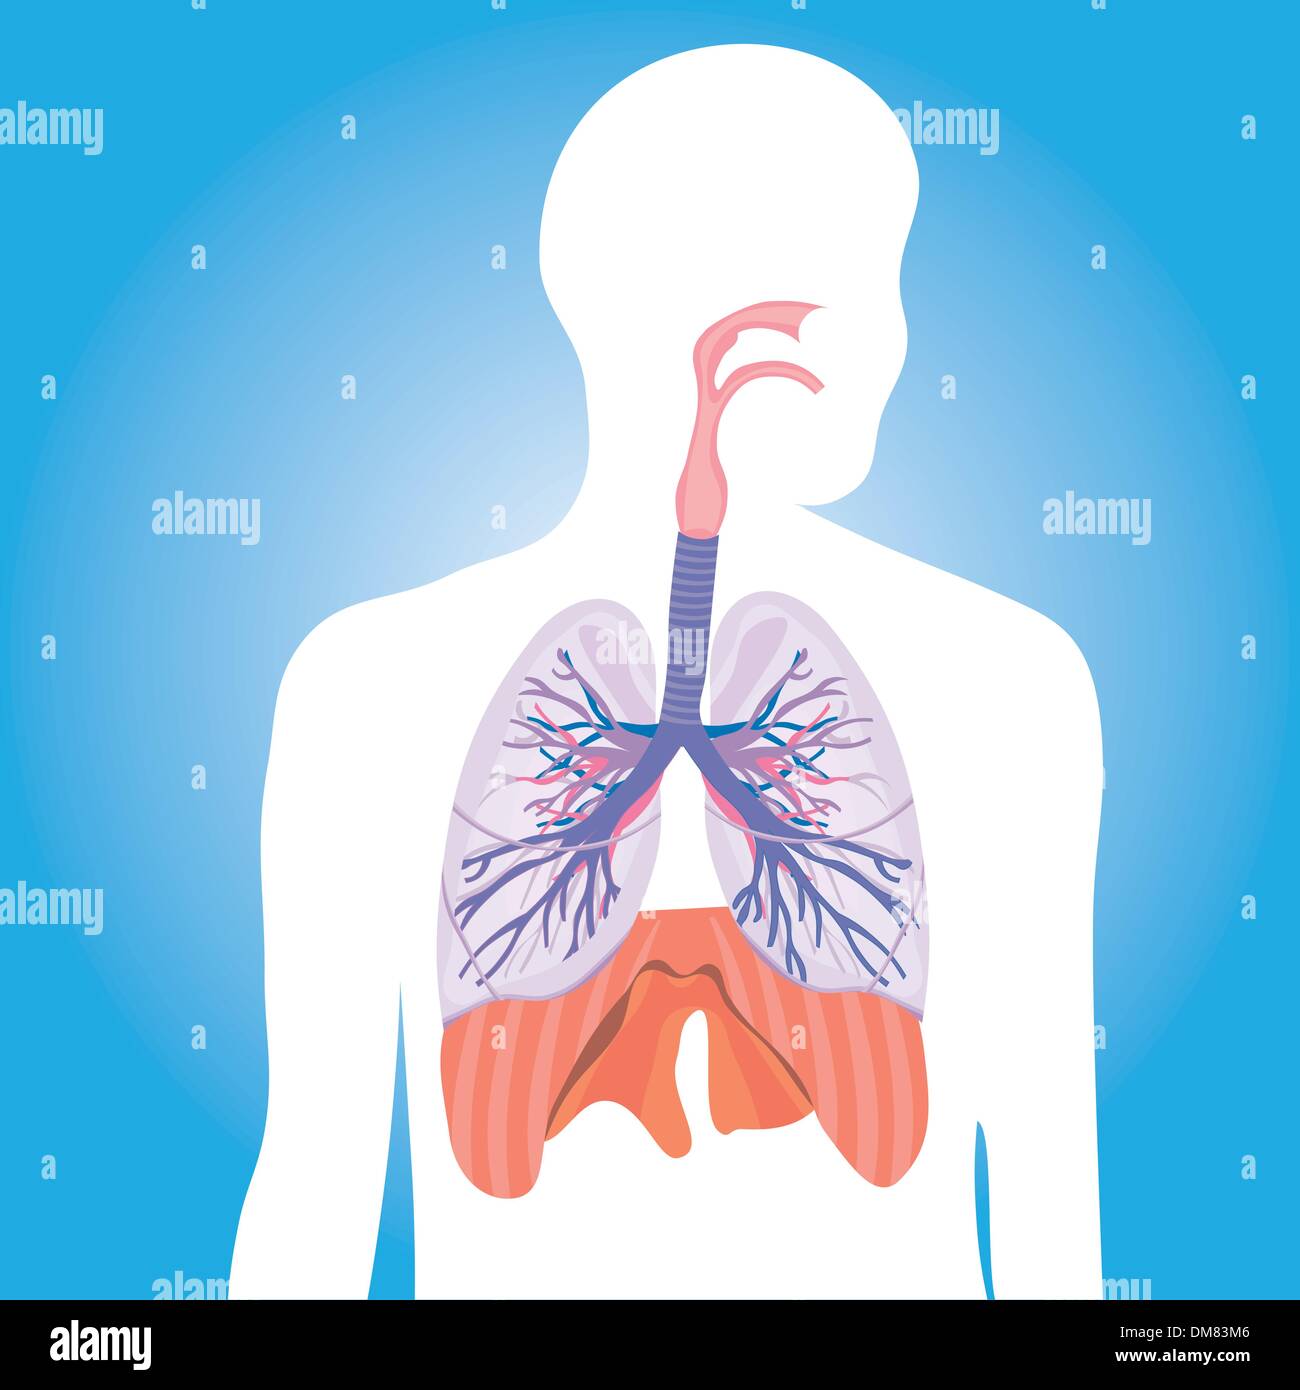 Atemwege Lunge Vektor-Illustration der menschliche Körper  Stock-Vektorgrafik - Alamy